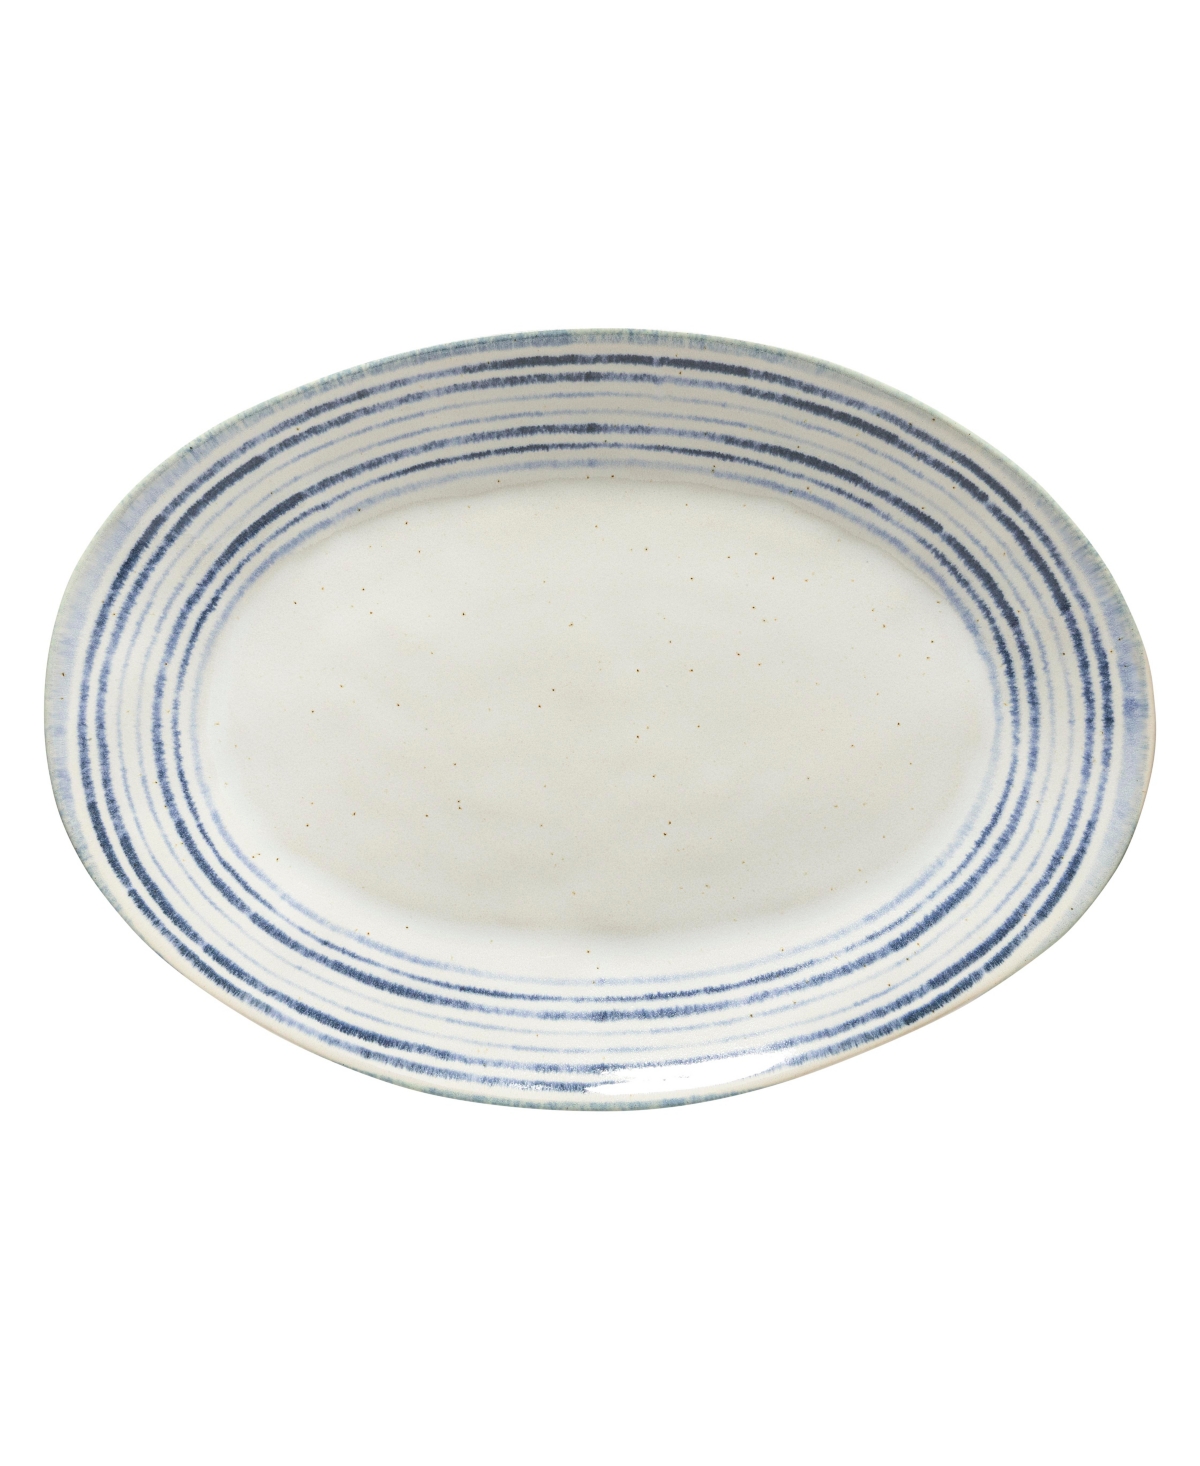 Casafina Nantucket Platter 16 Inch In Blue  White